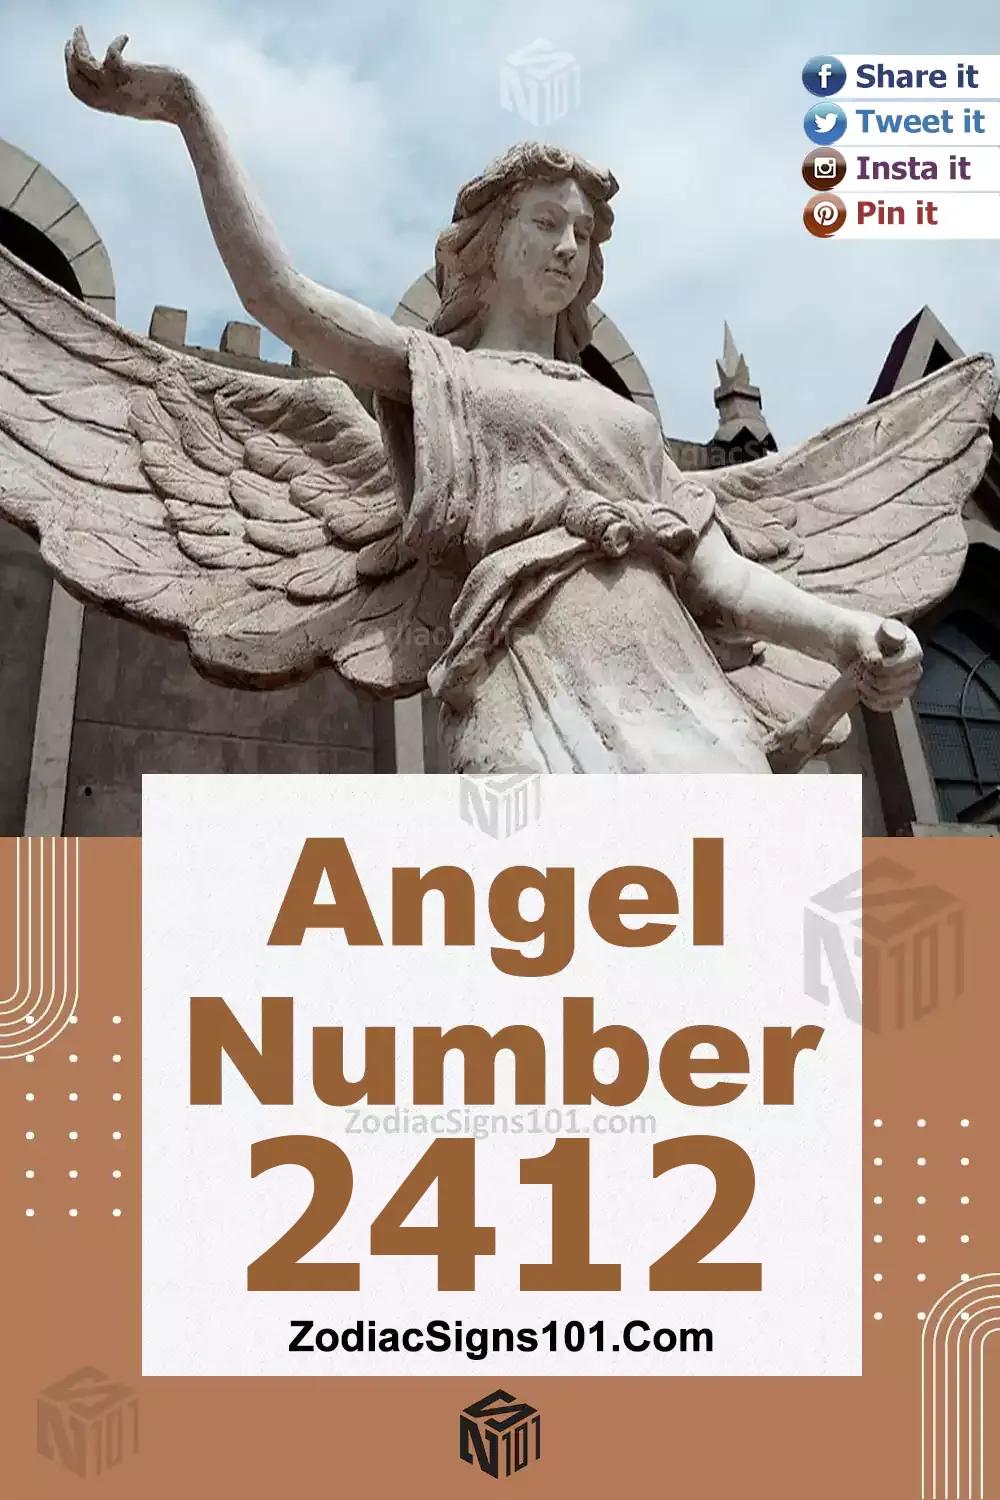 2412-Angel-Number-Meaning.jpg